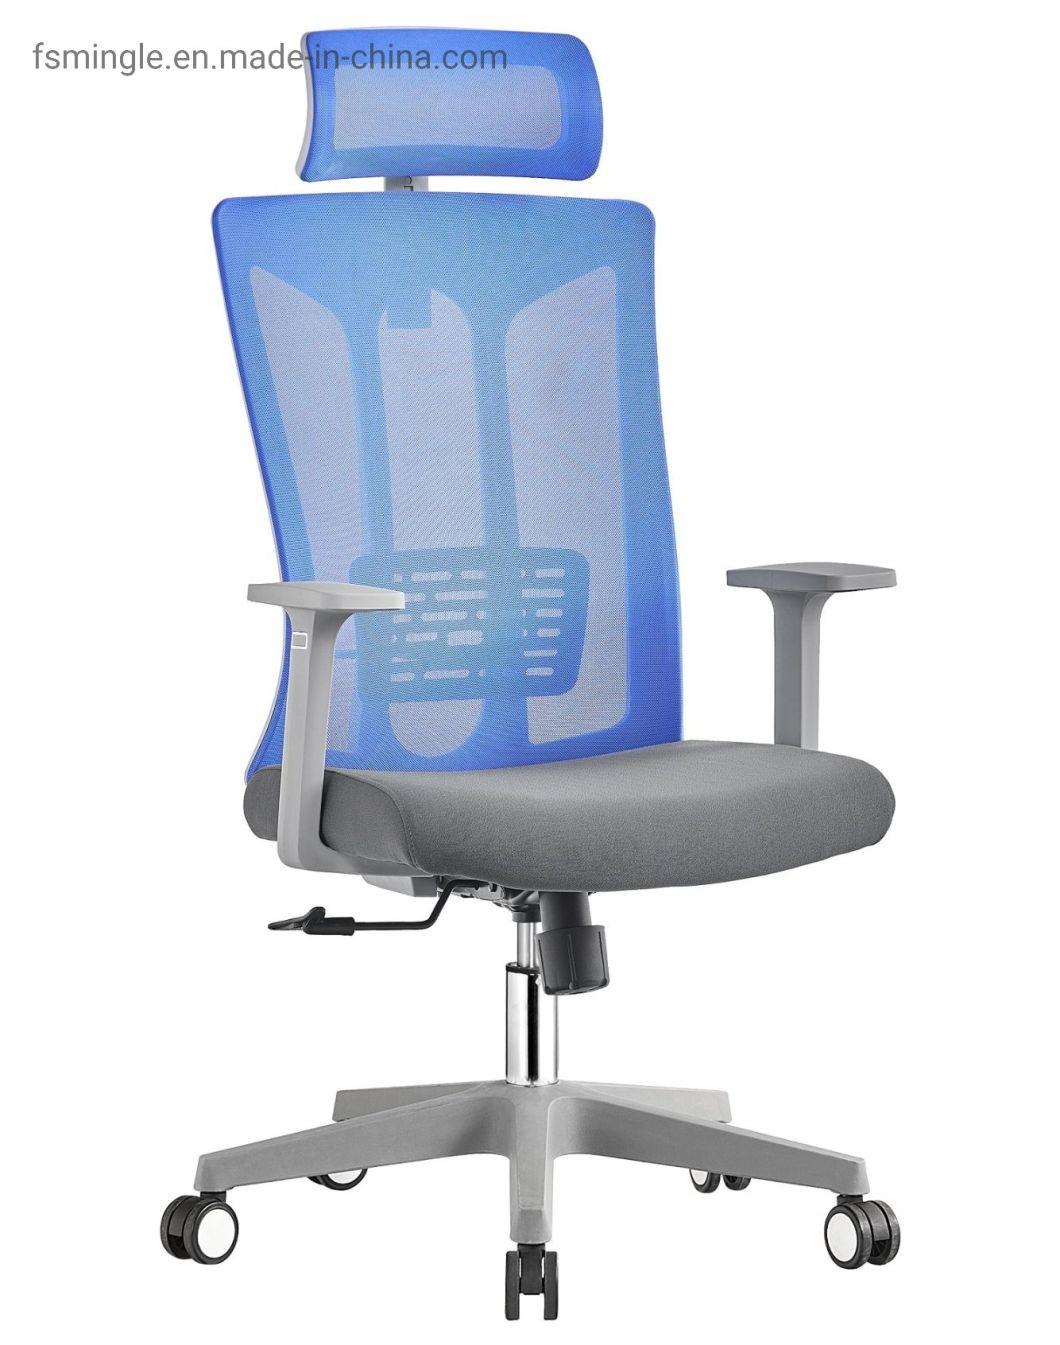 Ahsipa Adjustable High Back Executive Chair Ergonomic Mesh Swivel Office Chair with Headrest